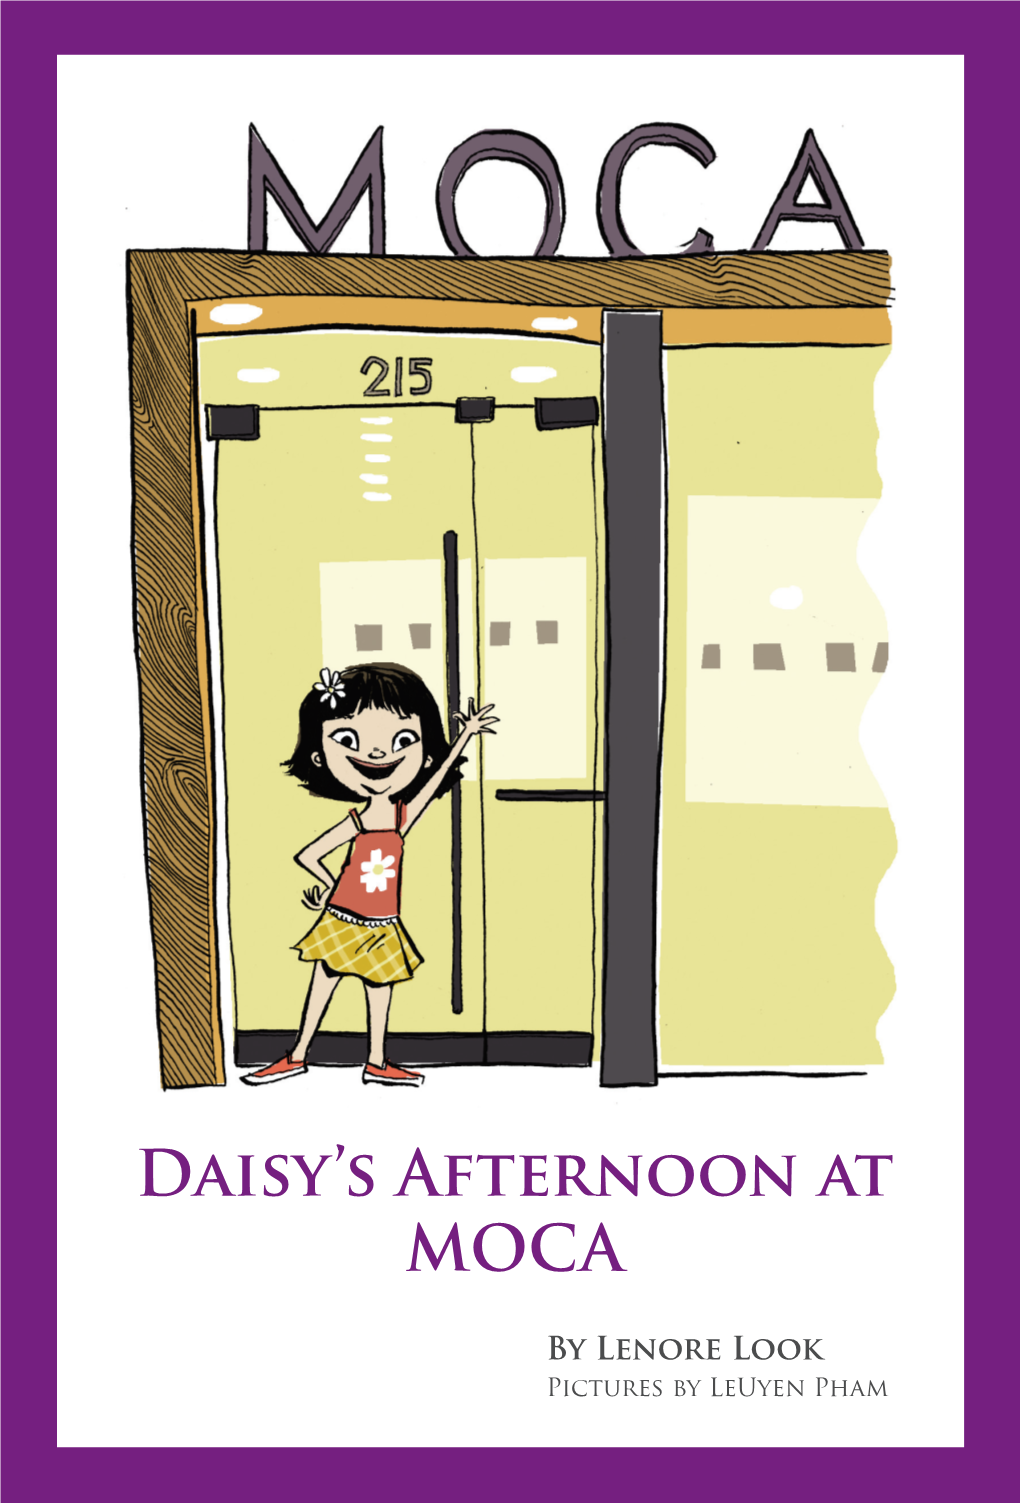 Daisy's Afternoon at MOCA